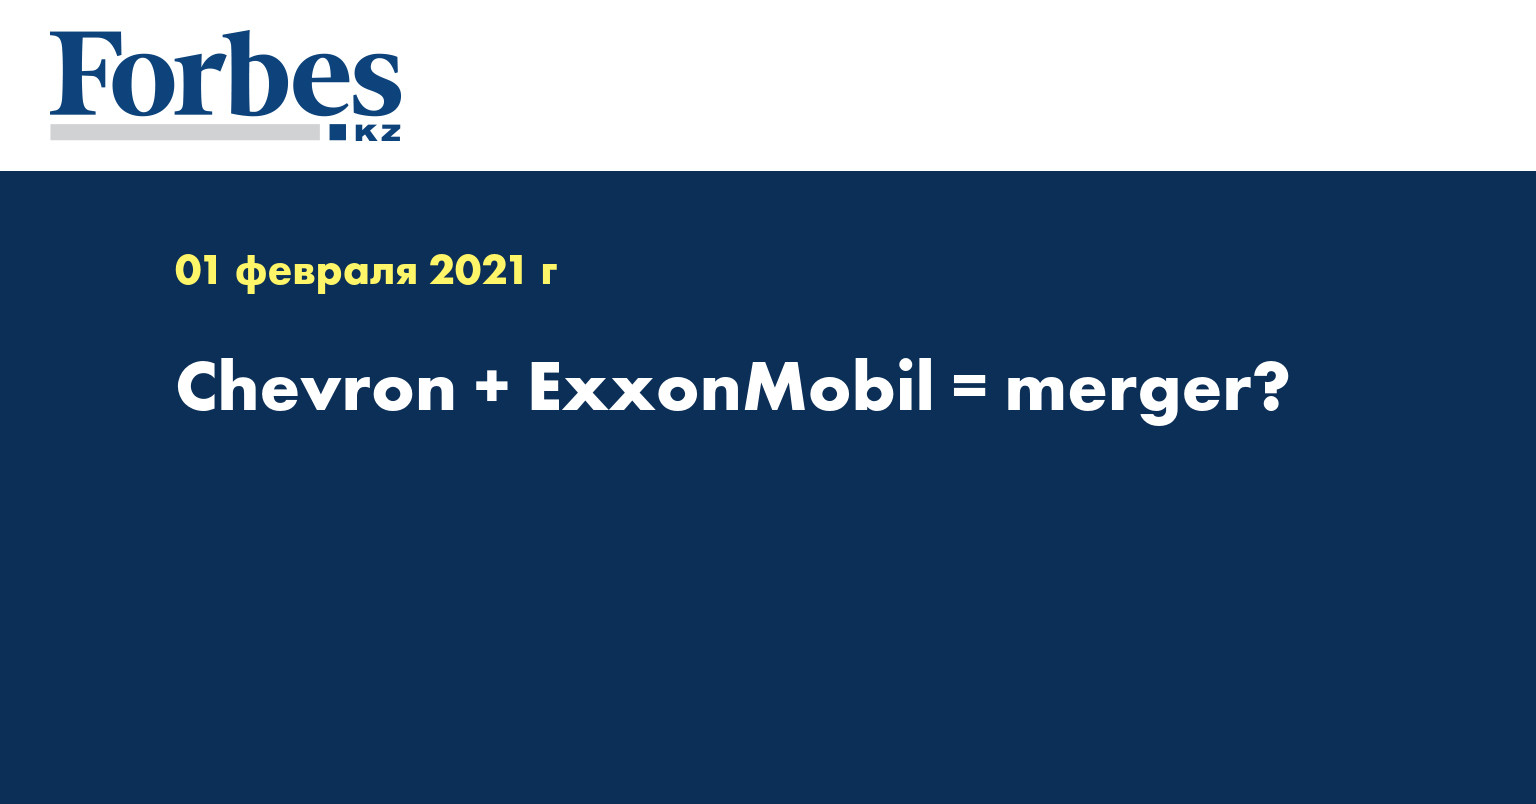 Chevron + ExxonMobil = merger?